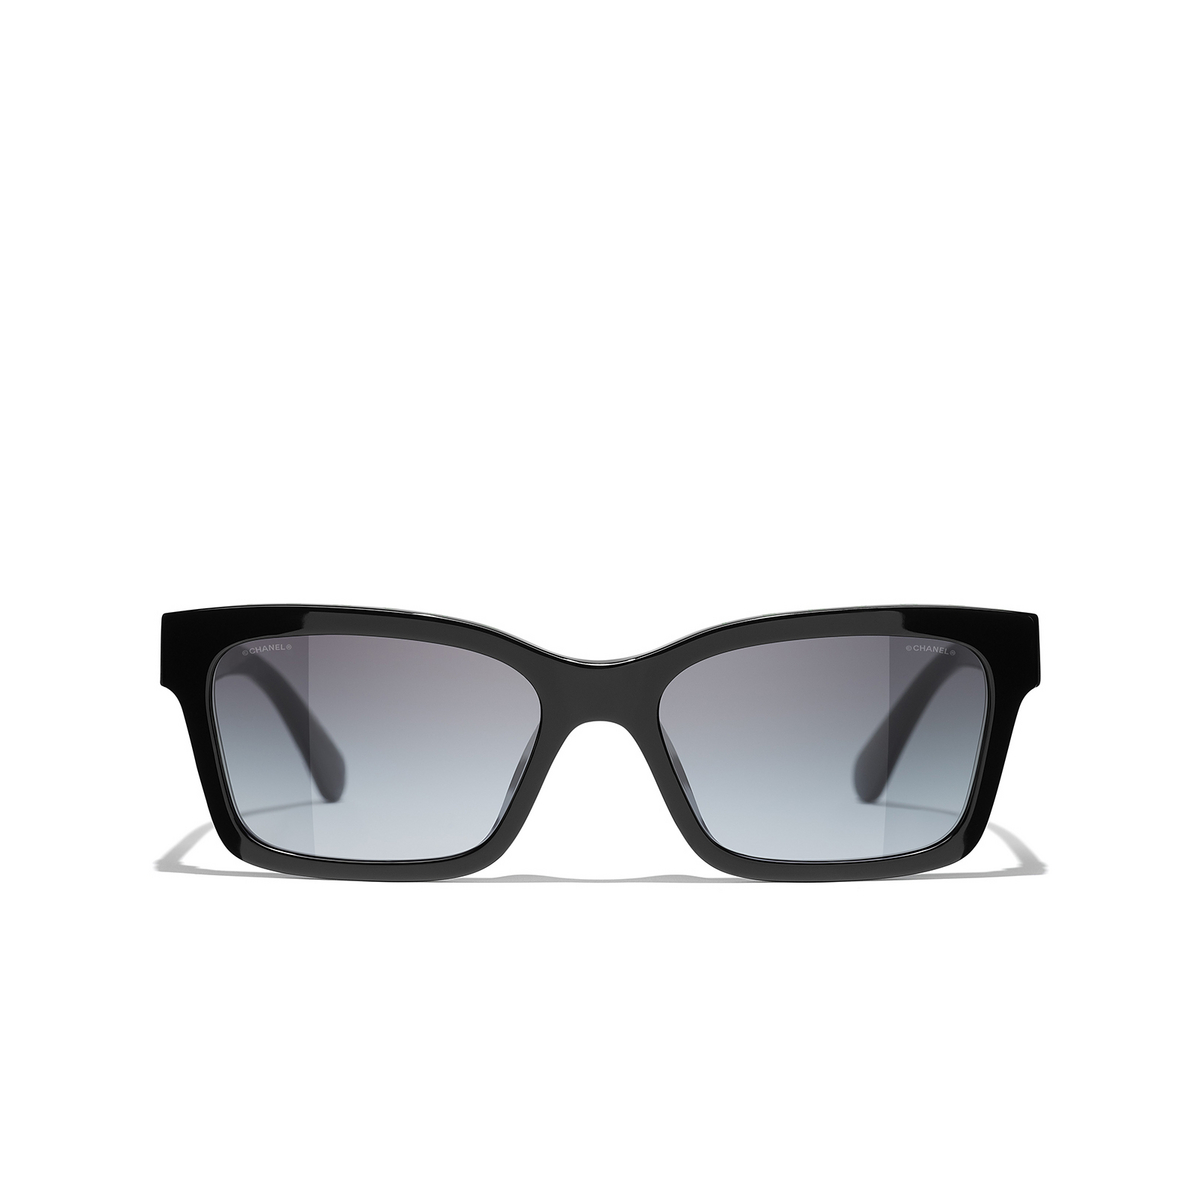 CHANEL square Sunglasses 1710S6 Black & Green - front view